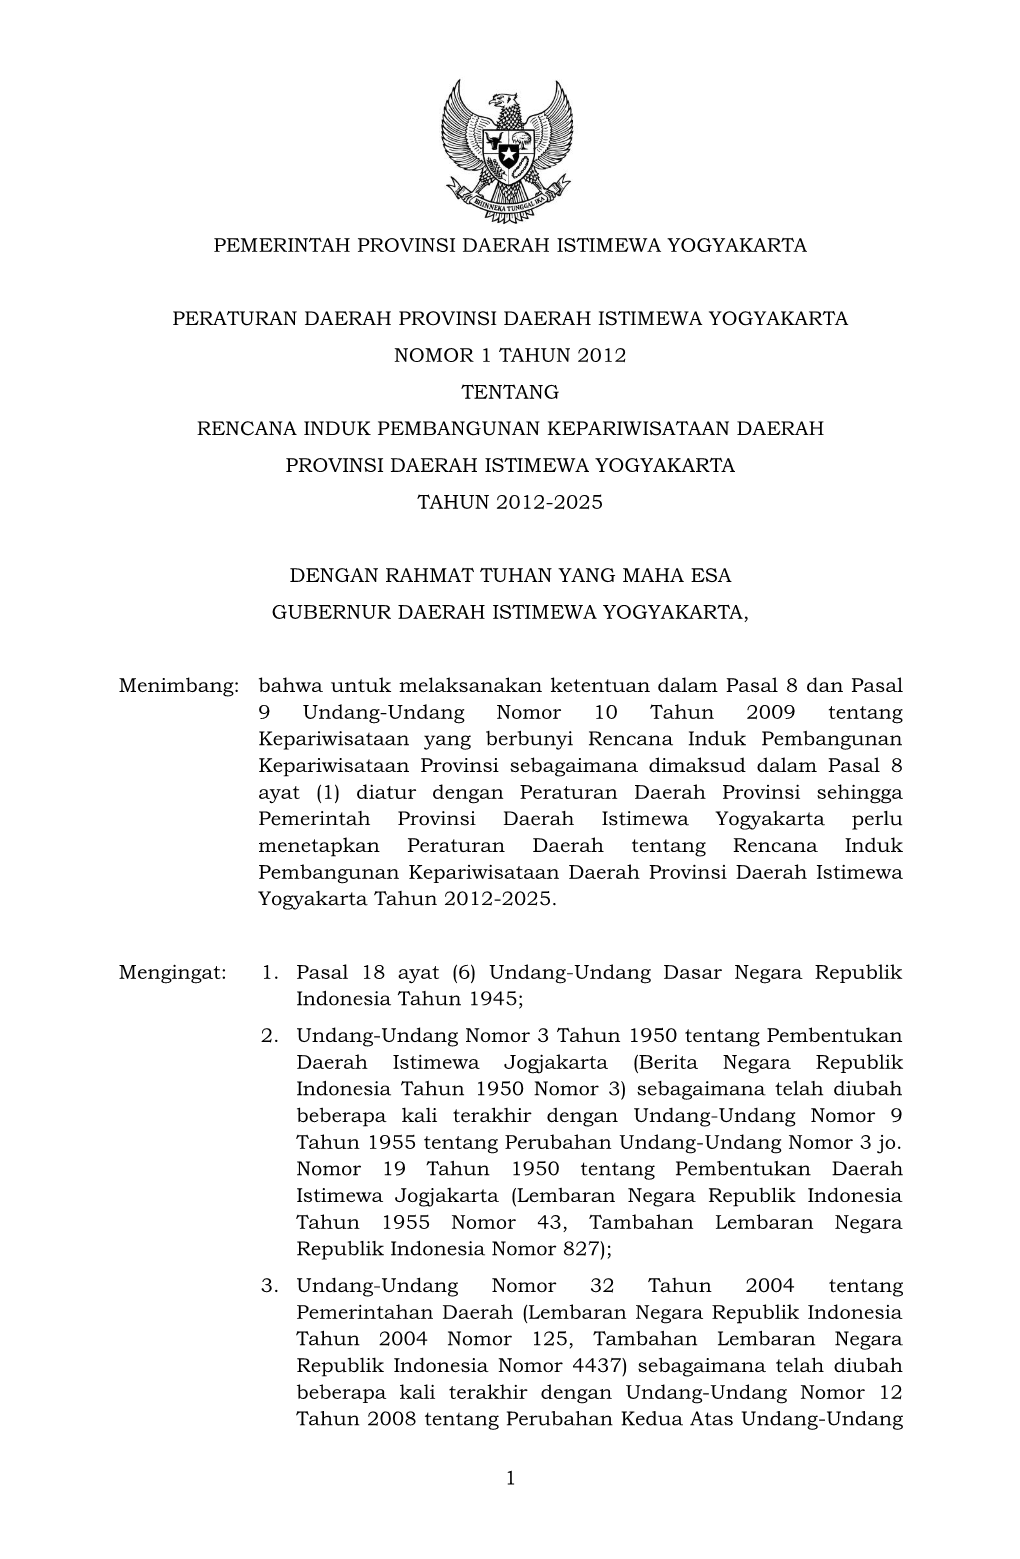 Peraturan Daerah Provinsi Daerah Istimewa Yogyakarta Nomor 1 Tahun 2012 Tentang Rencana Induk Pembangunan Kepariwisataan Daerah